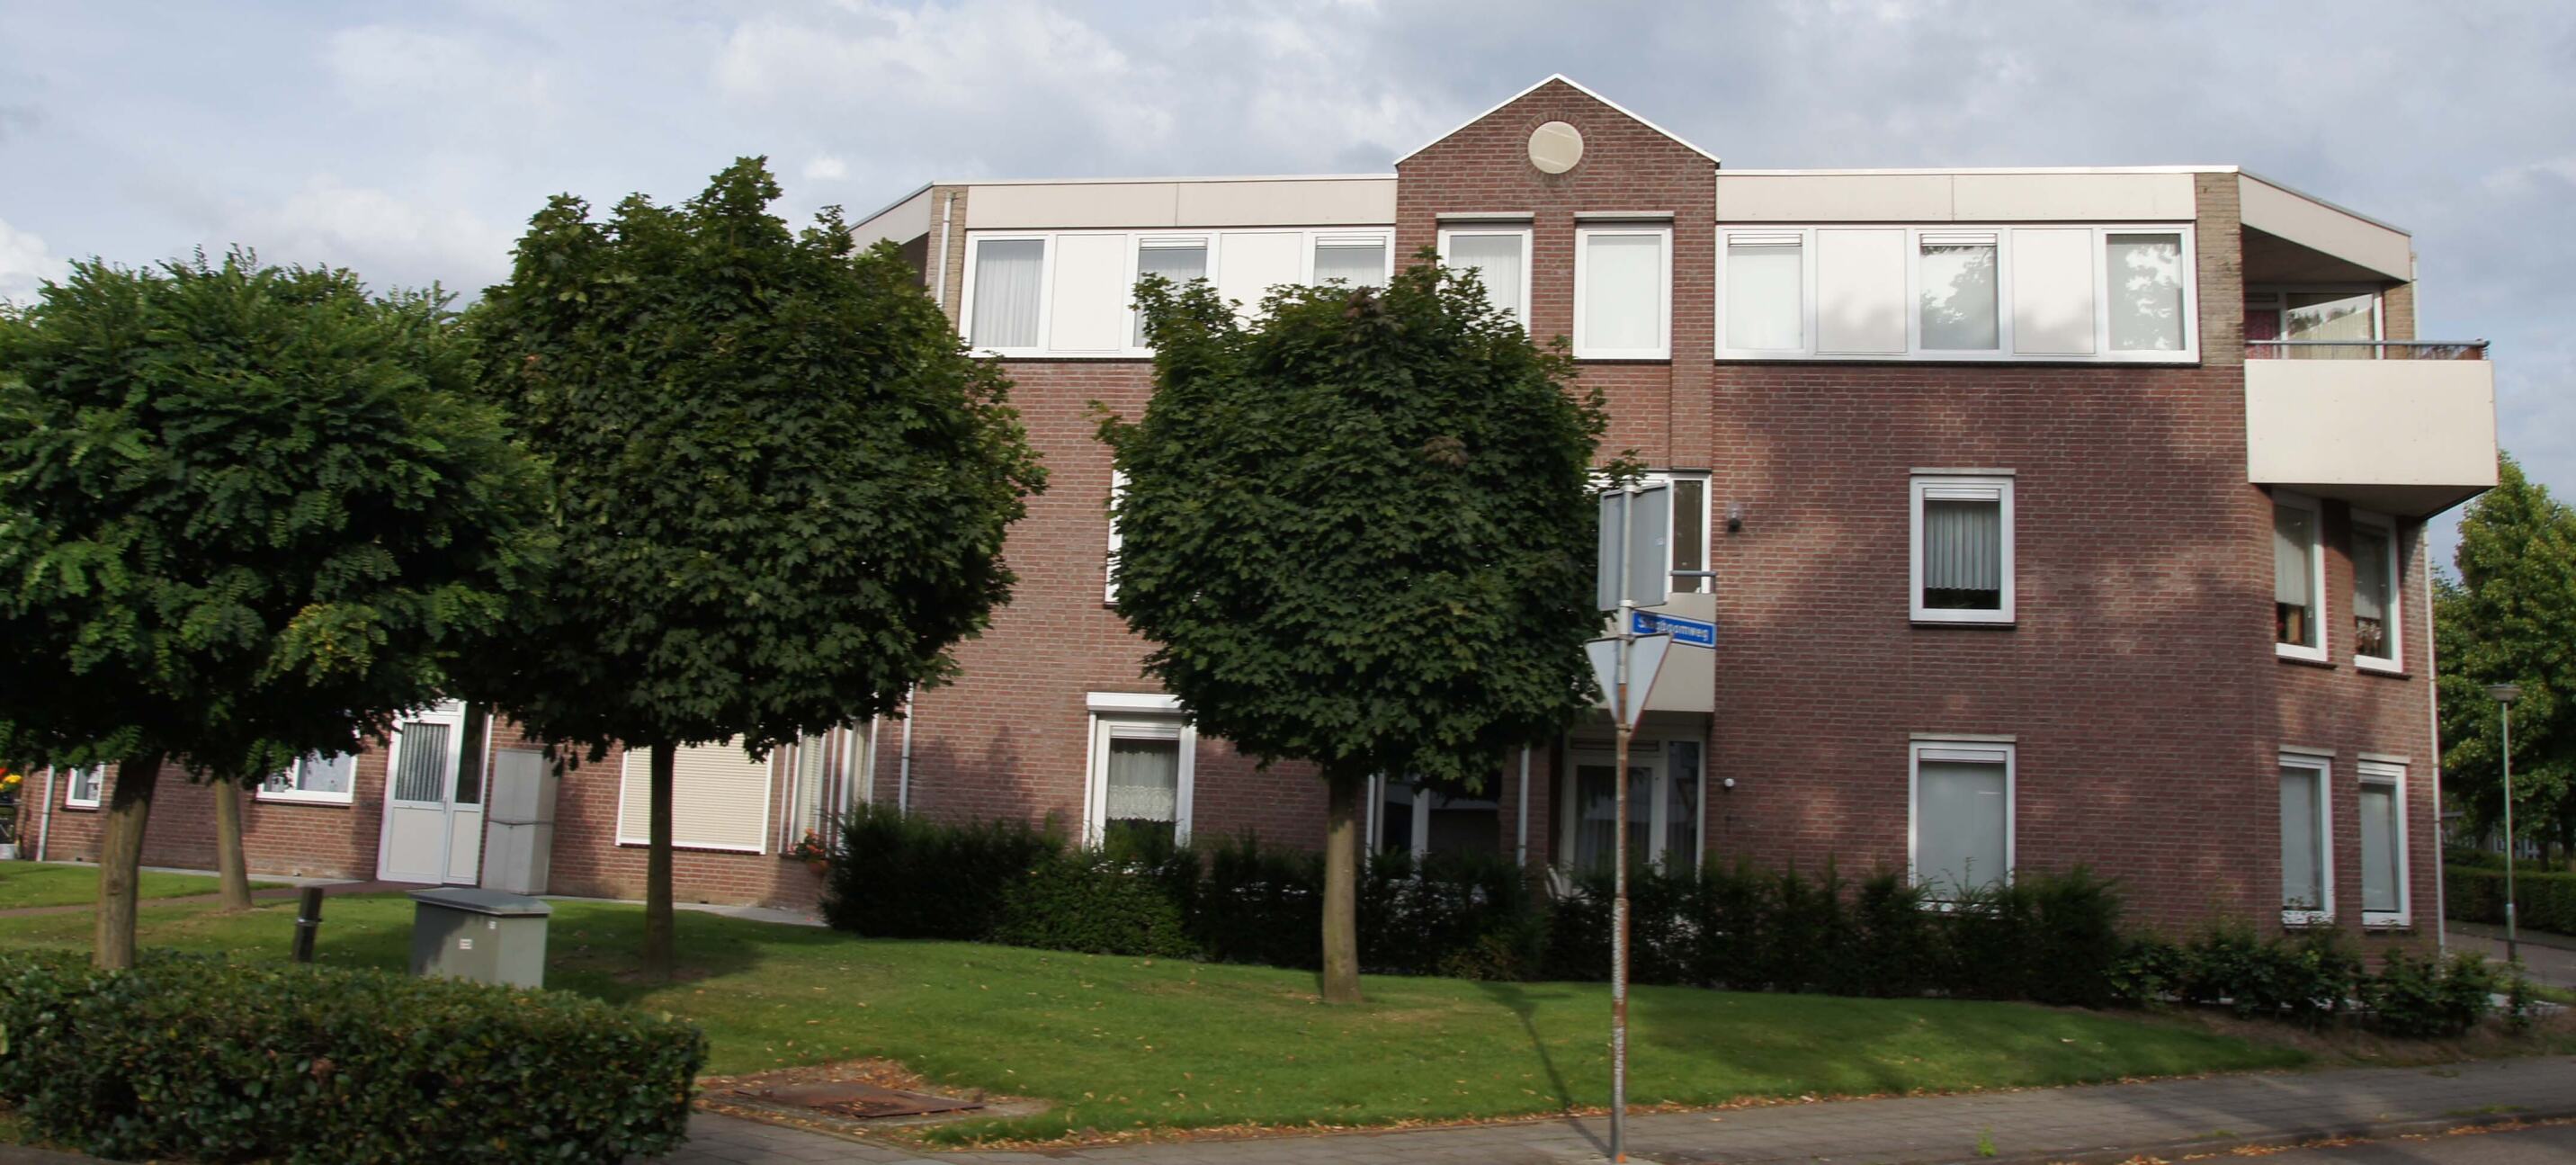 Sint Antoniusplein 17A, 6129 EV Urmond, Nederland